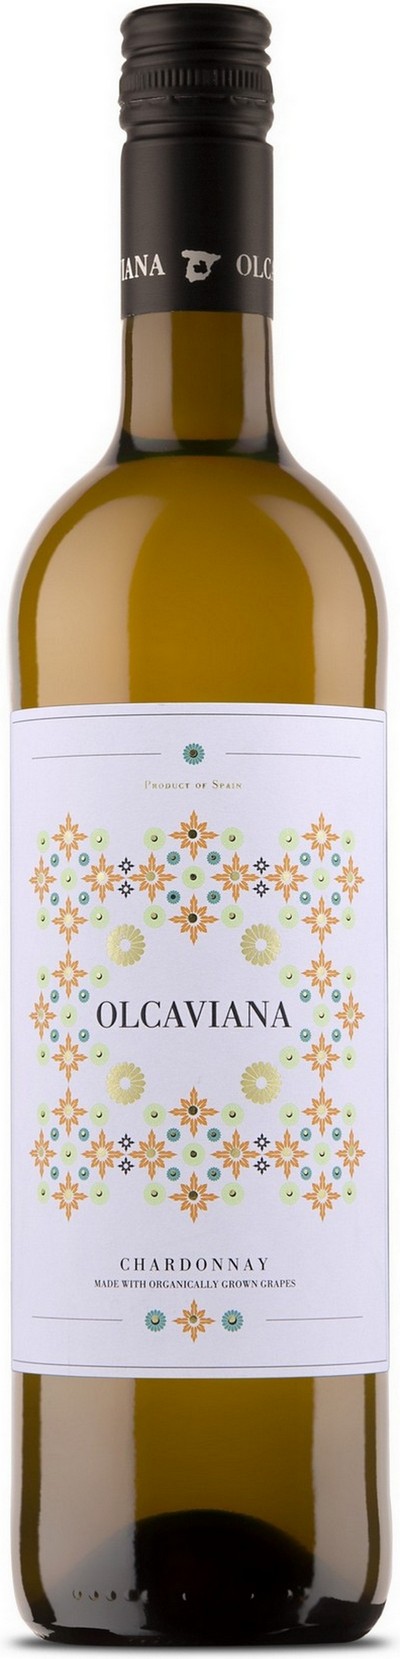 olcaviana-chardonnay-organic-wine-2020